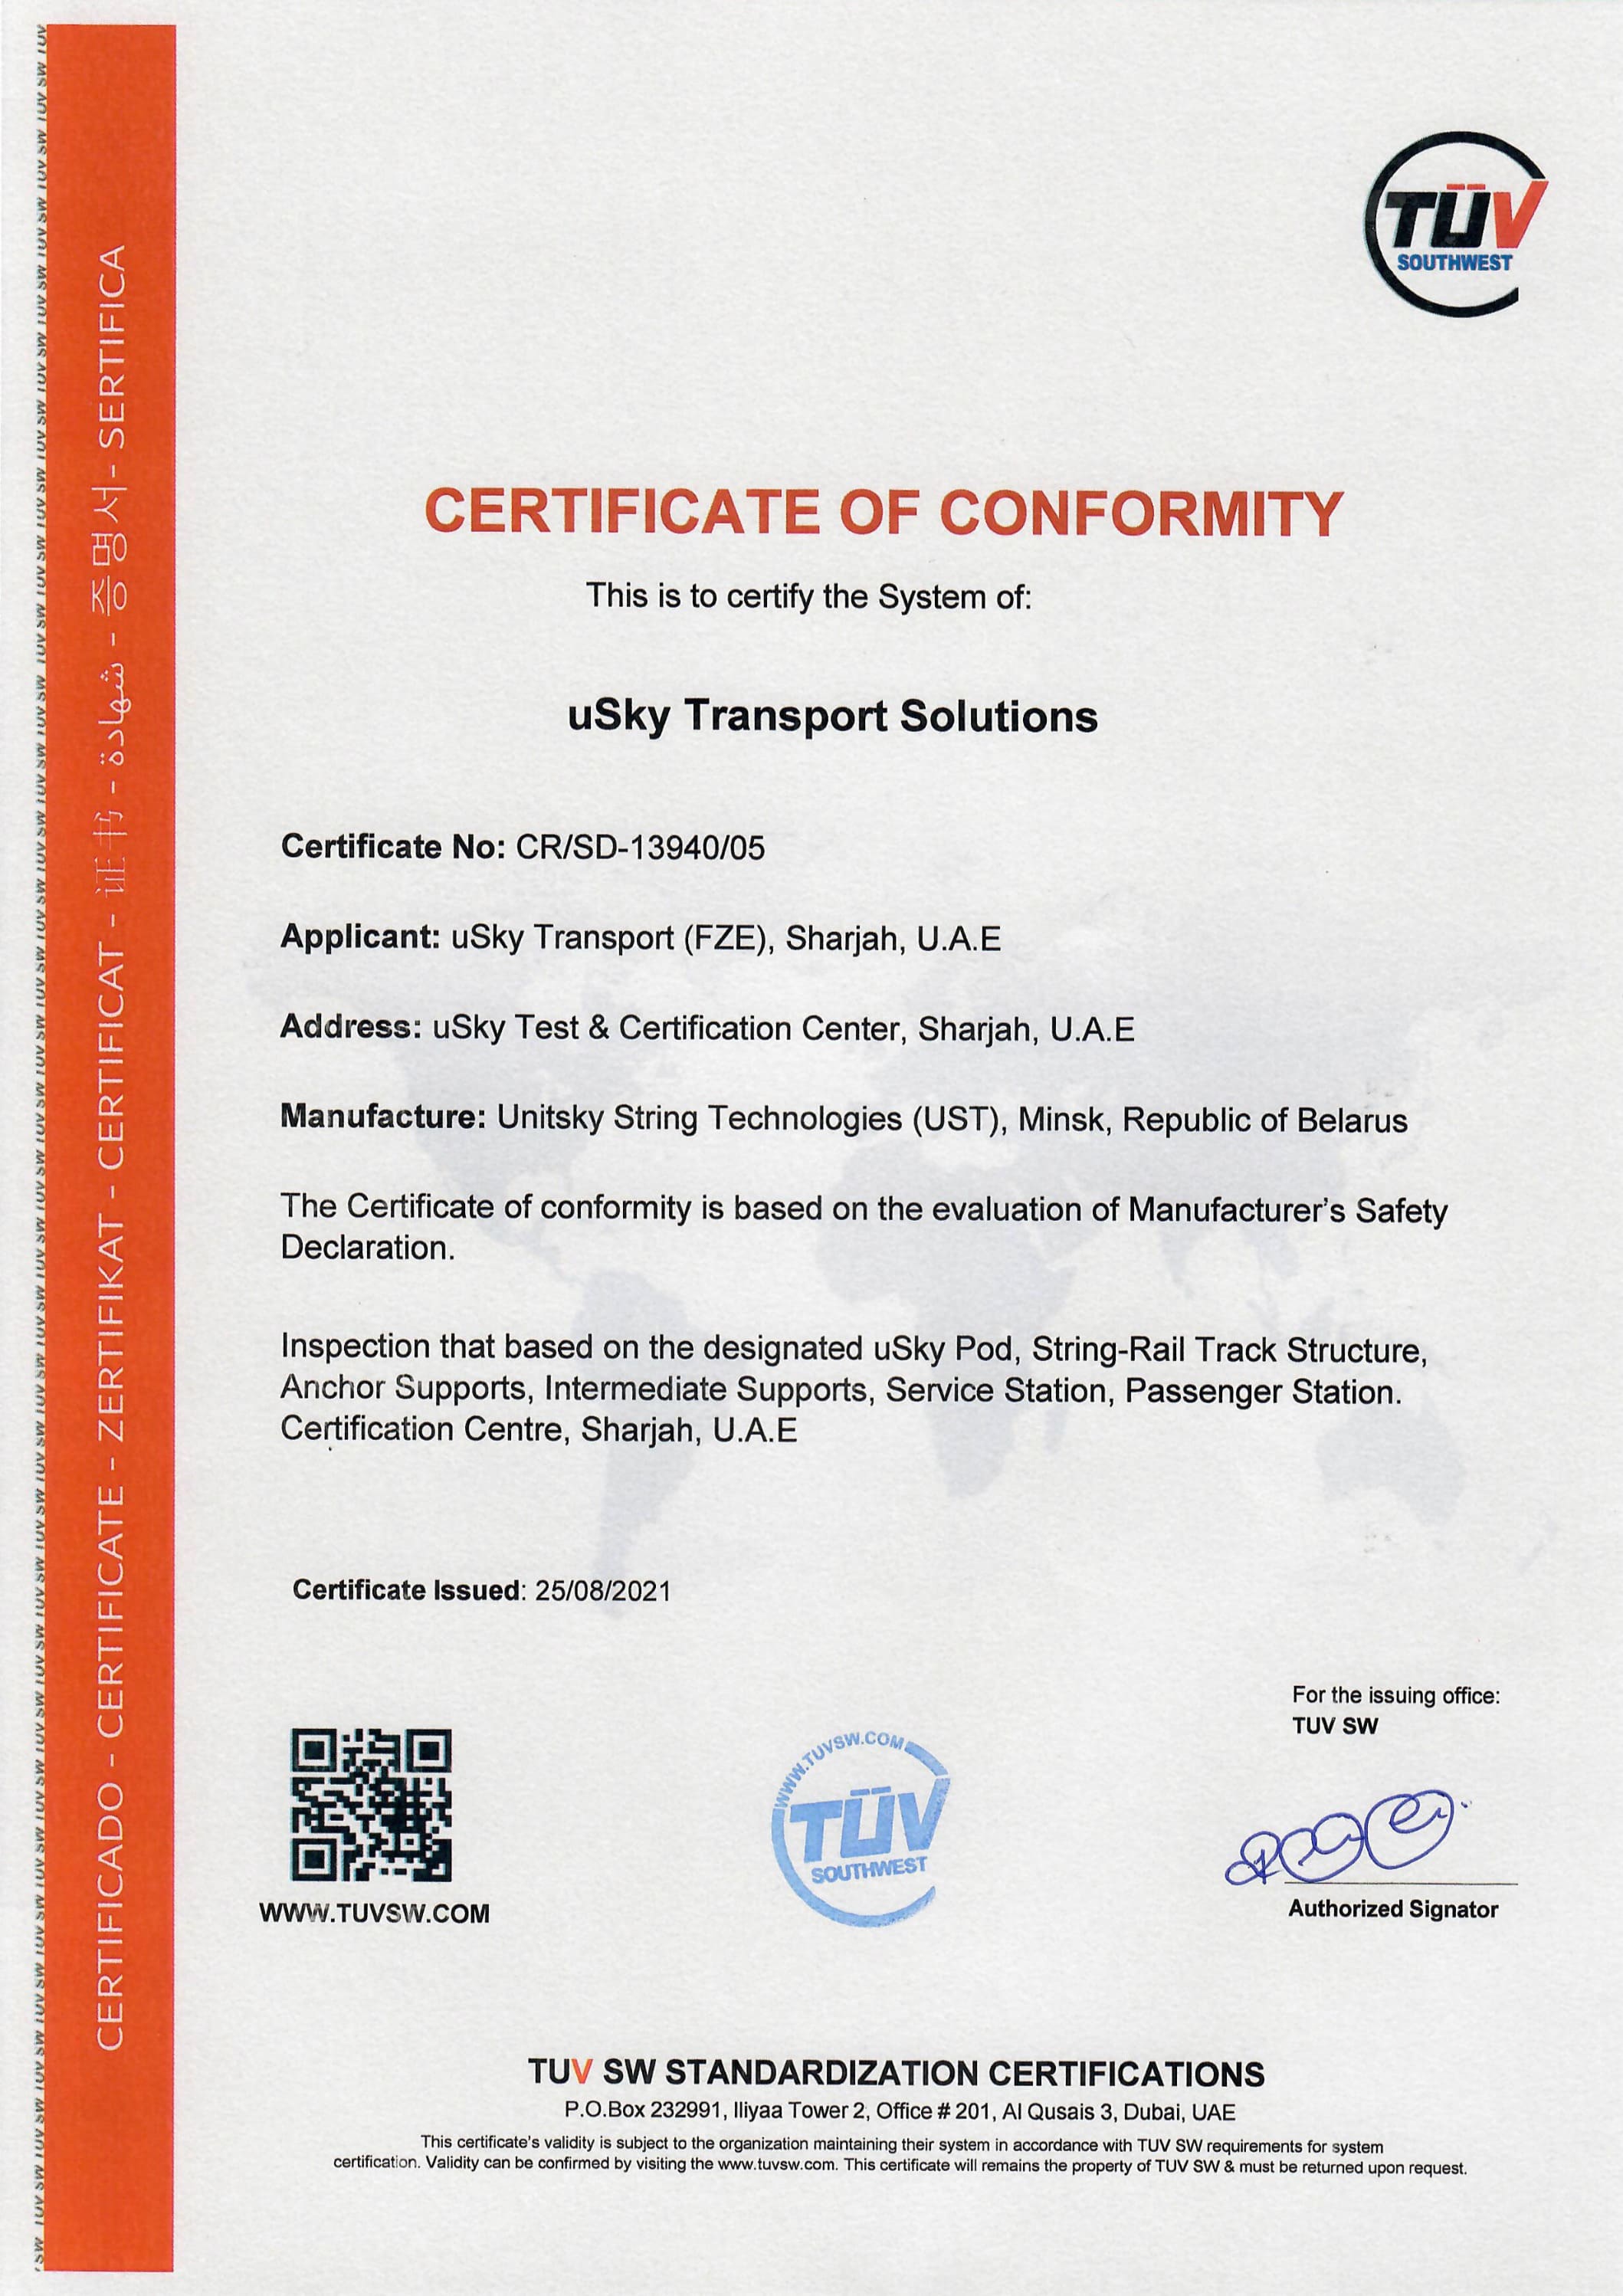 TUV SW Certificate of Conformity